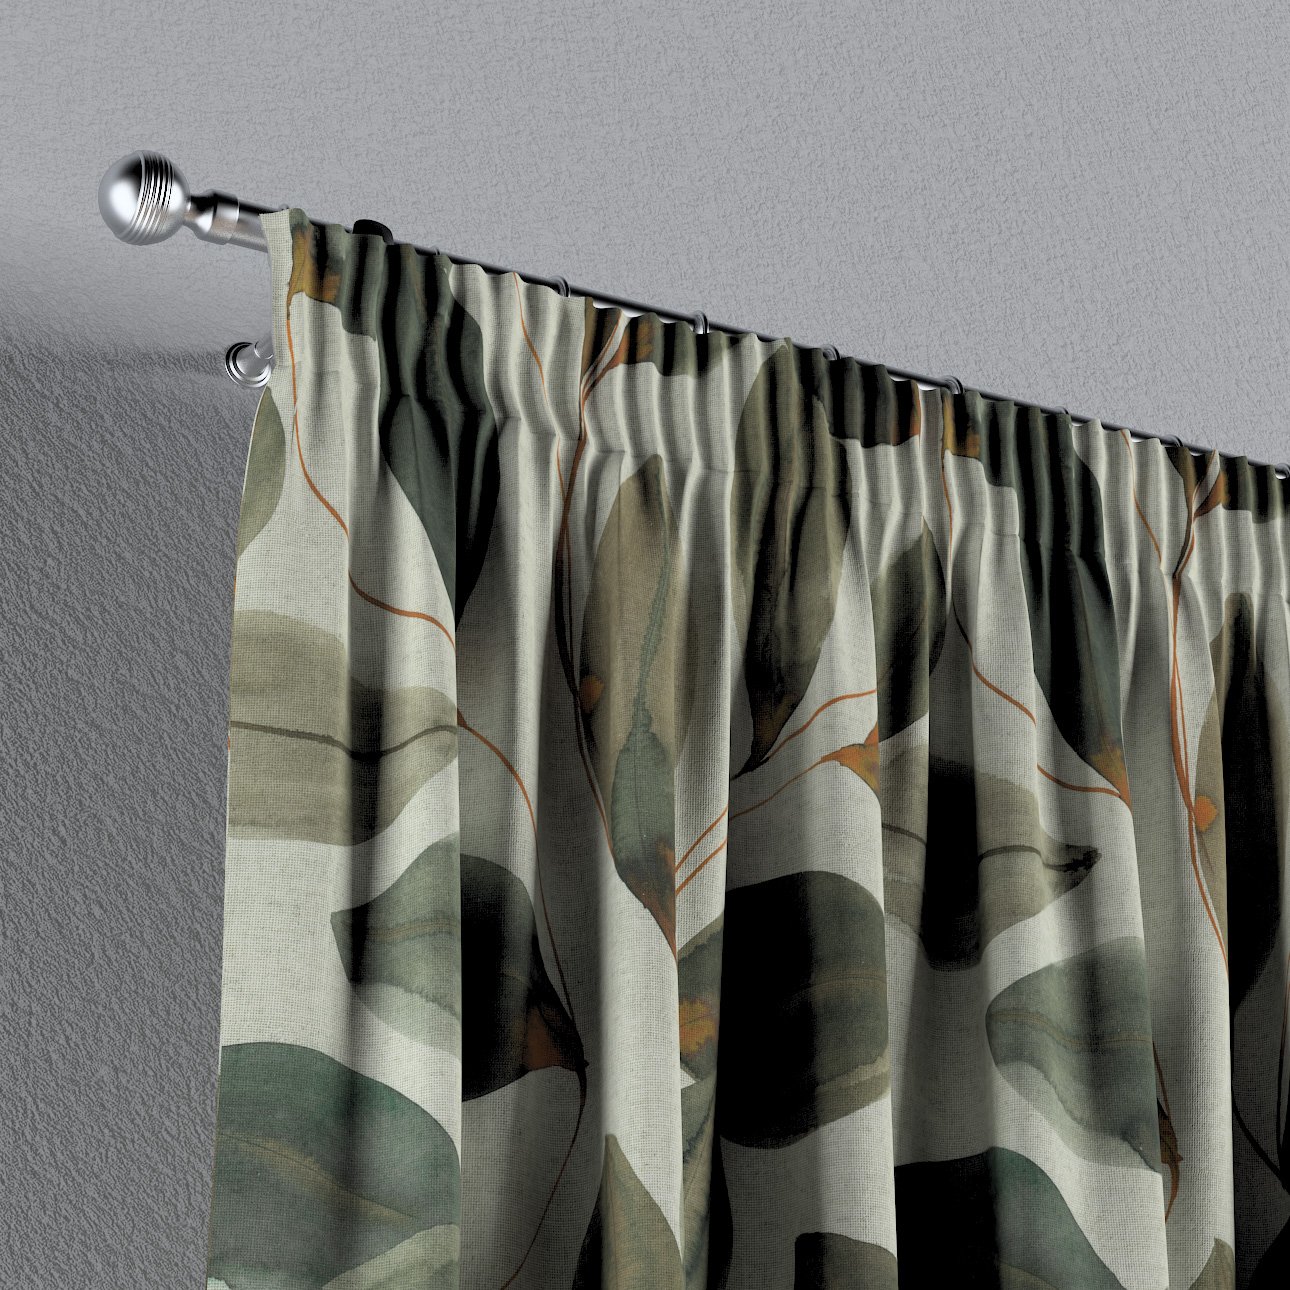 Vorhang mit Kräuselband, grau-grün, 143-17 | Fertiggardinen